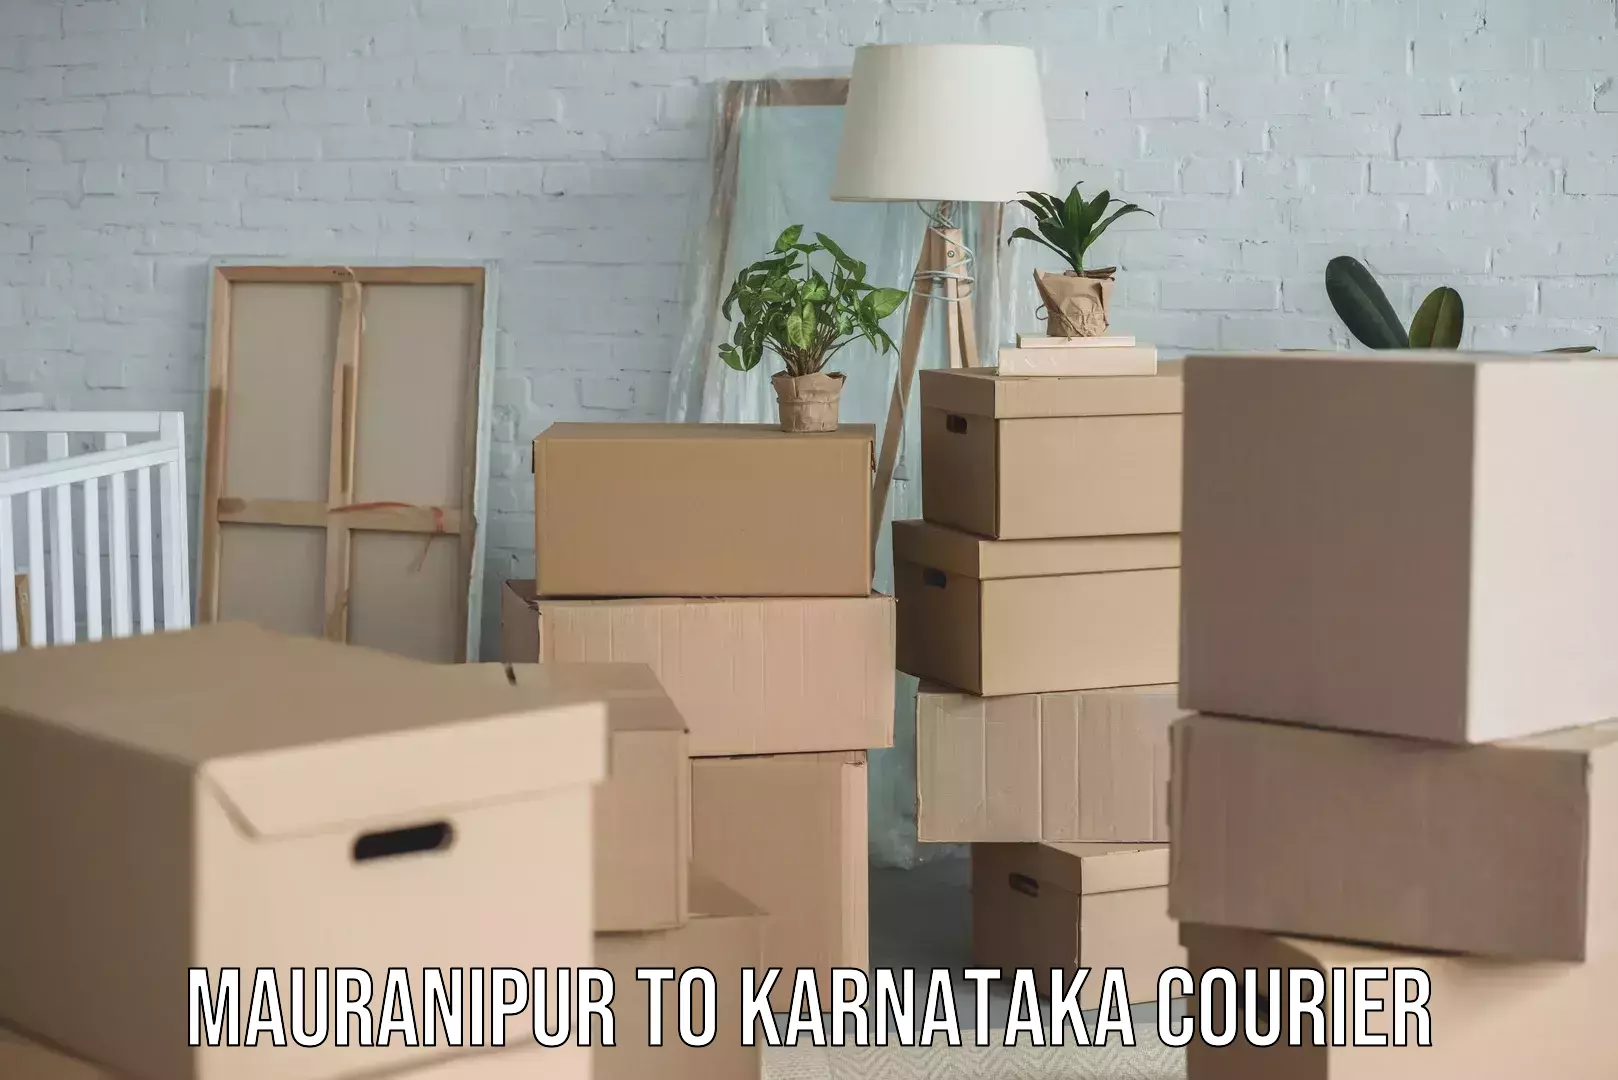 Trusted relocation experts Mauranipur to Karnataka